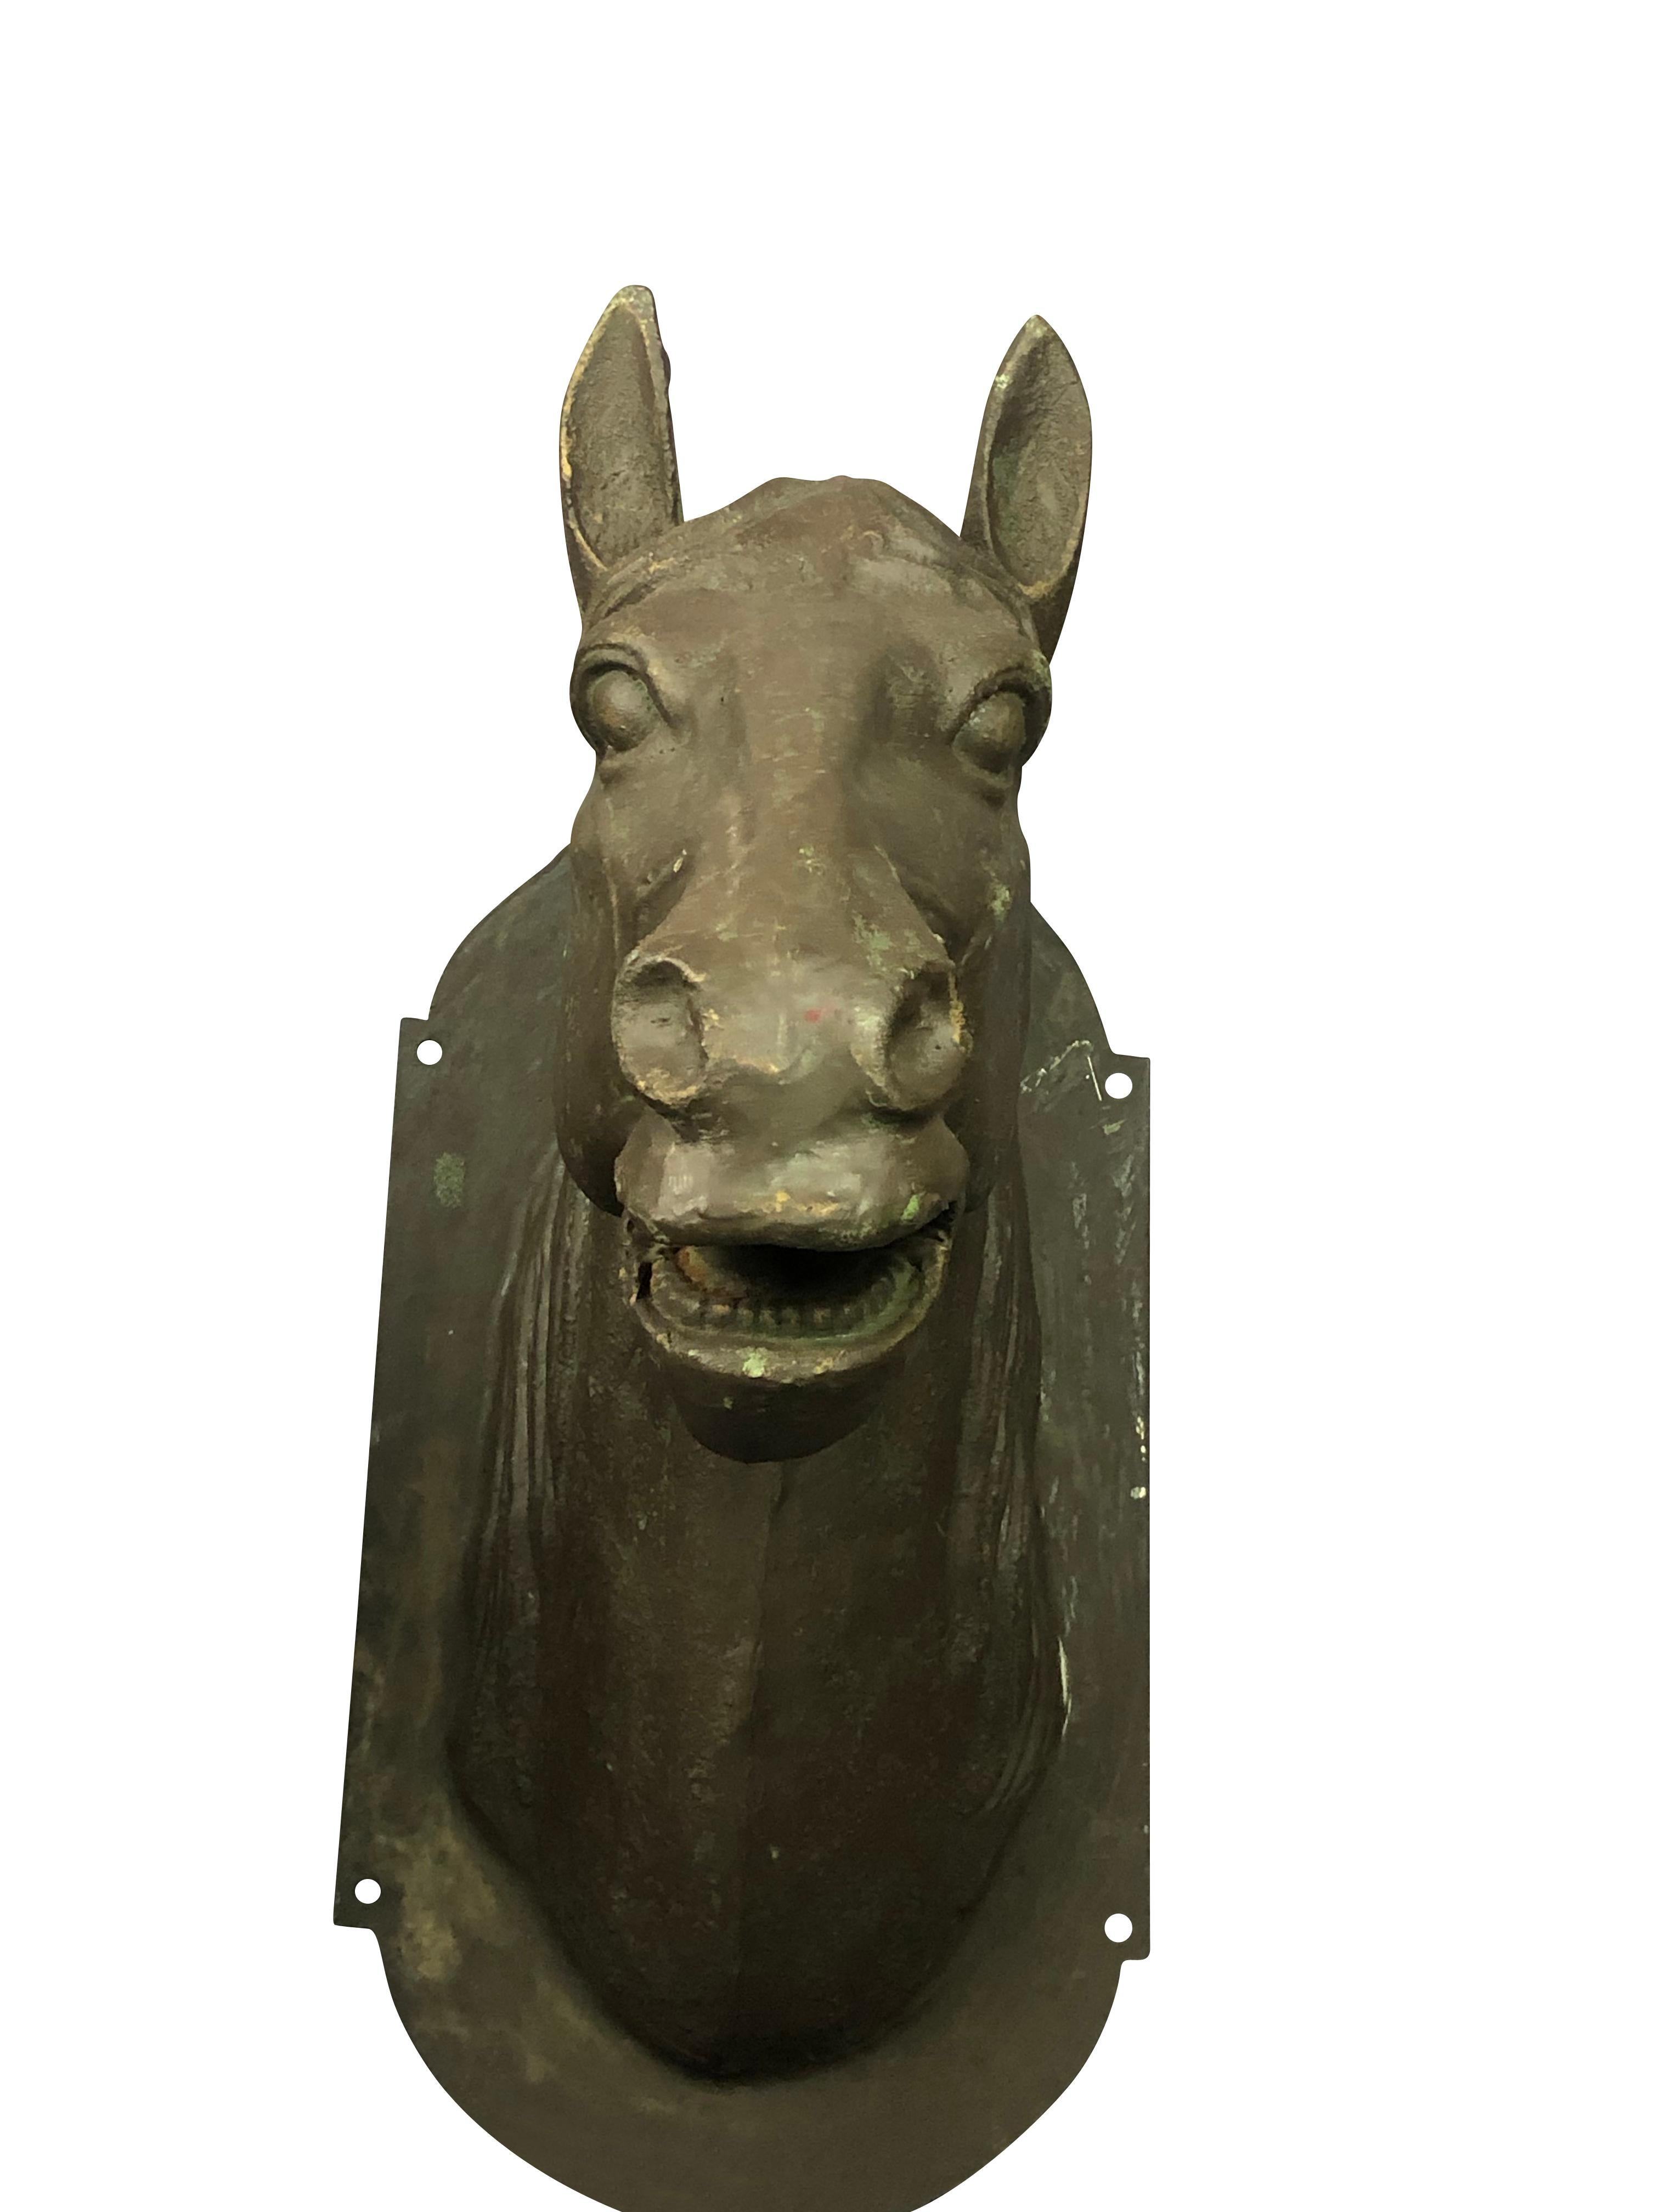 American Horse Head Sculptures Life-Size Mixed Metal